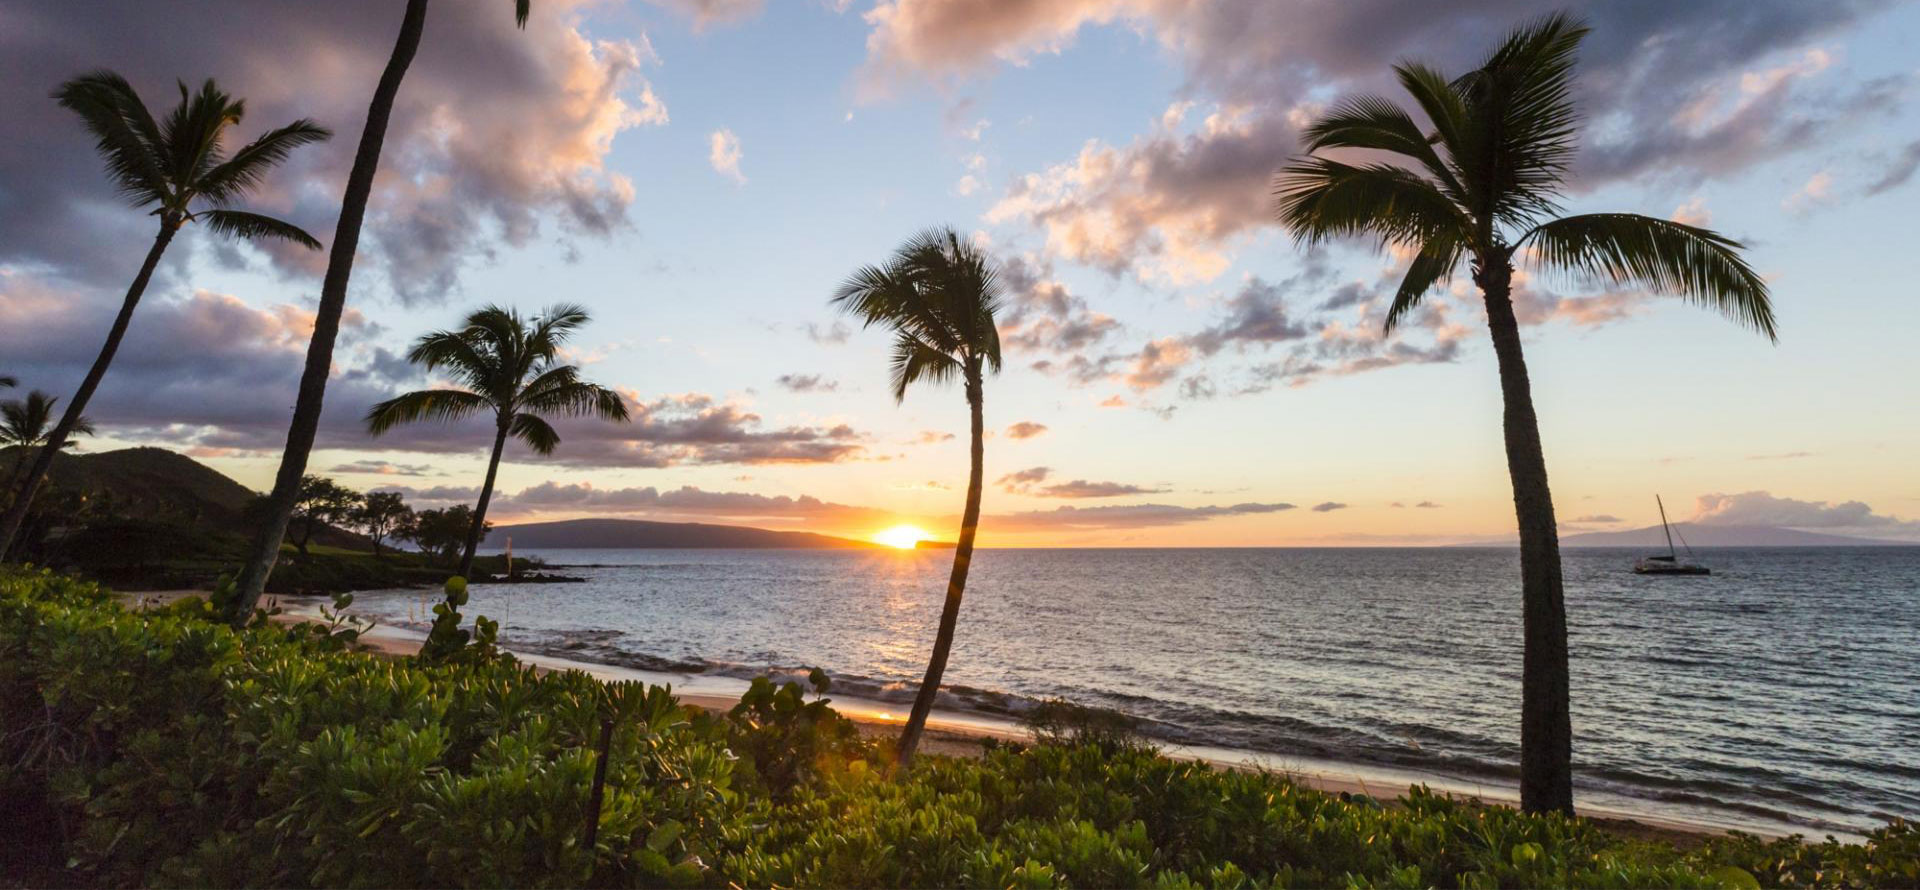 Palms on the beach in Hawaii.